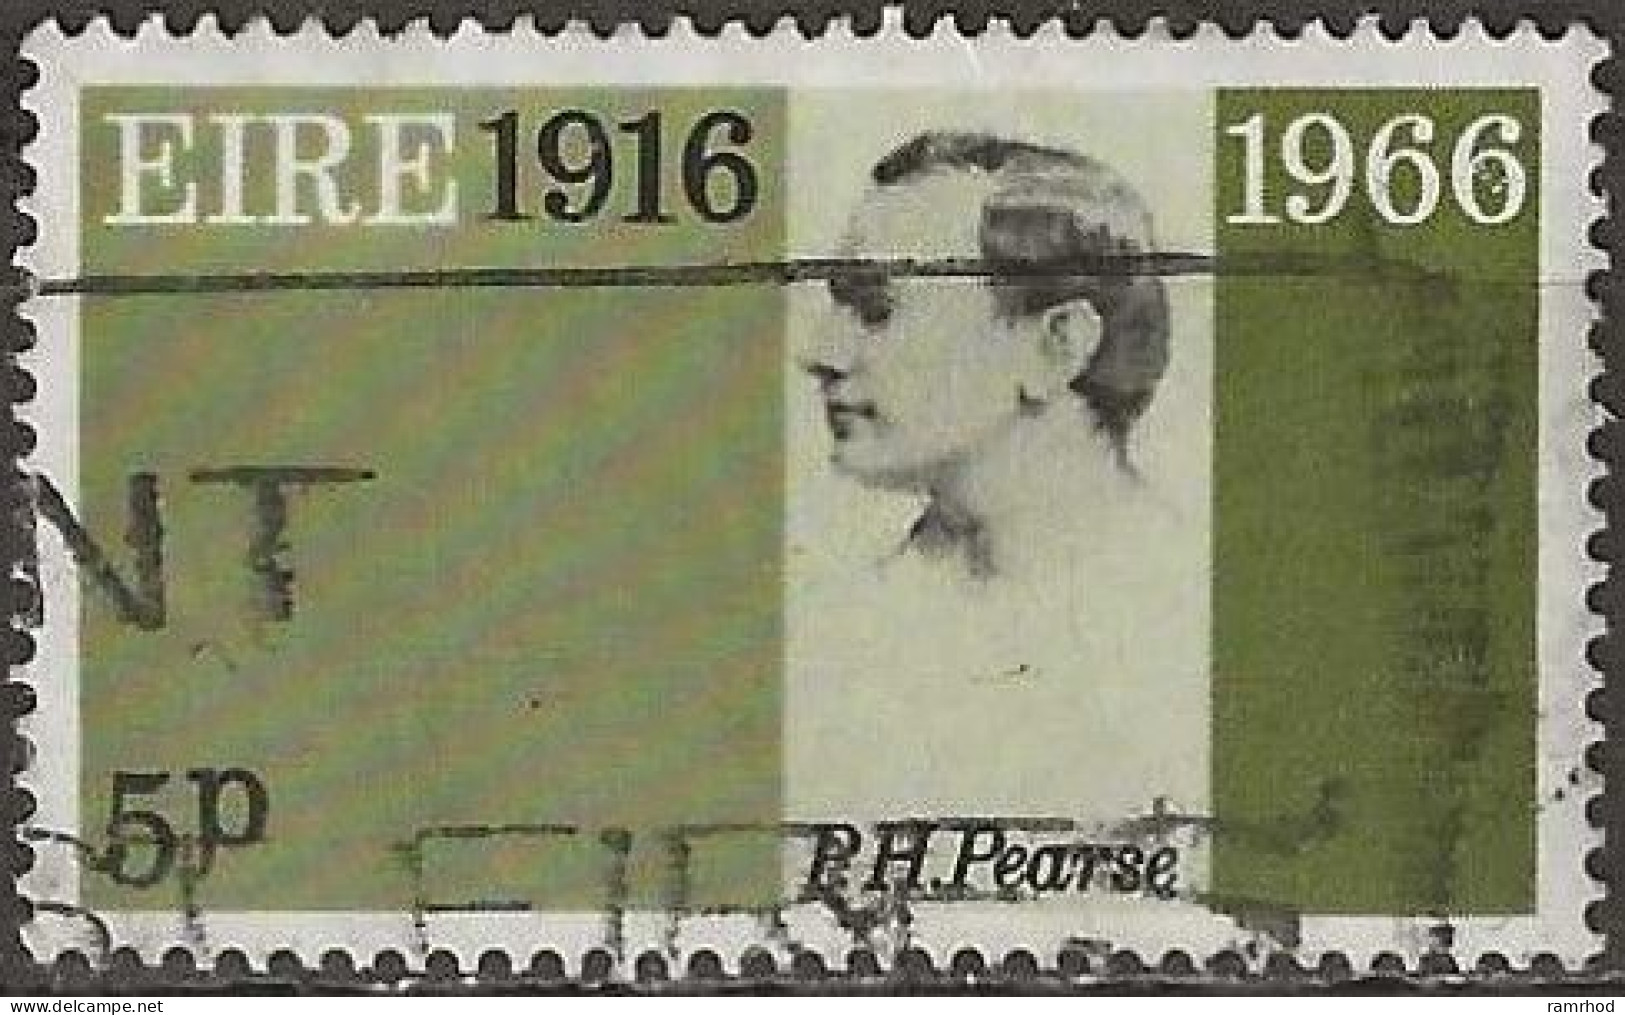 IRELAND 1966 50th Anniversary Of Easter Rising - 5d P. H. Pearse FU - Gebruikt